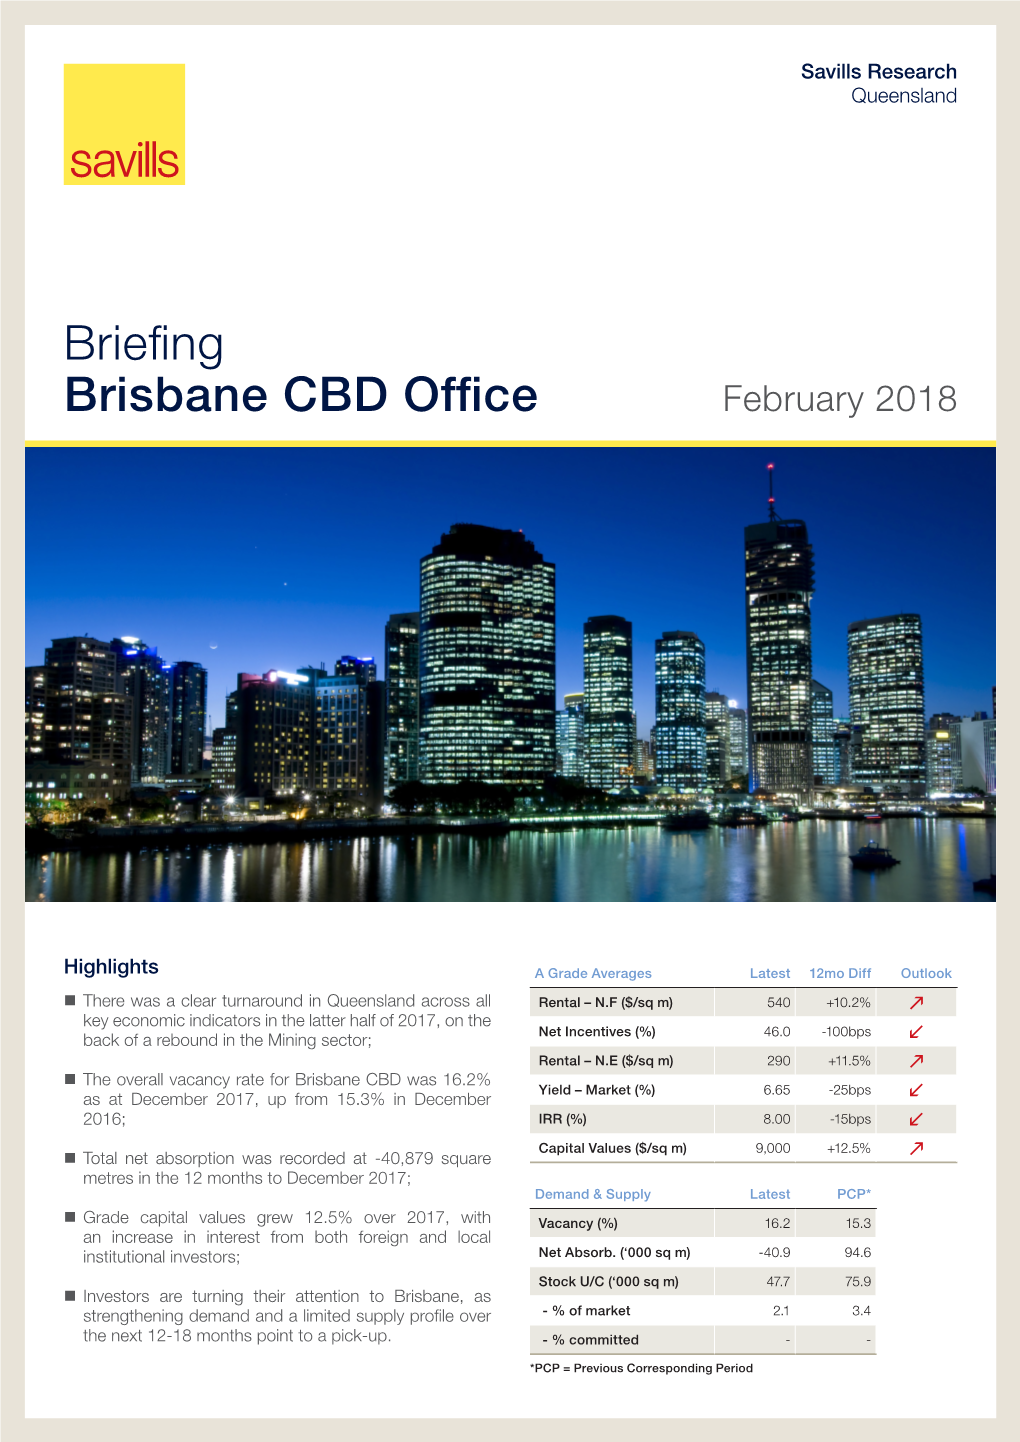 Briefing Brisbane CBD Office February 2018